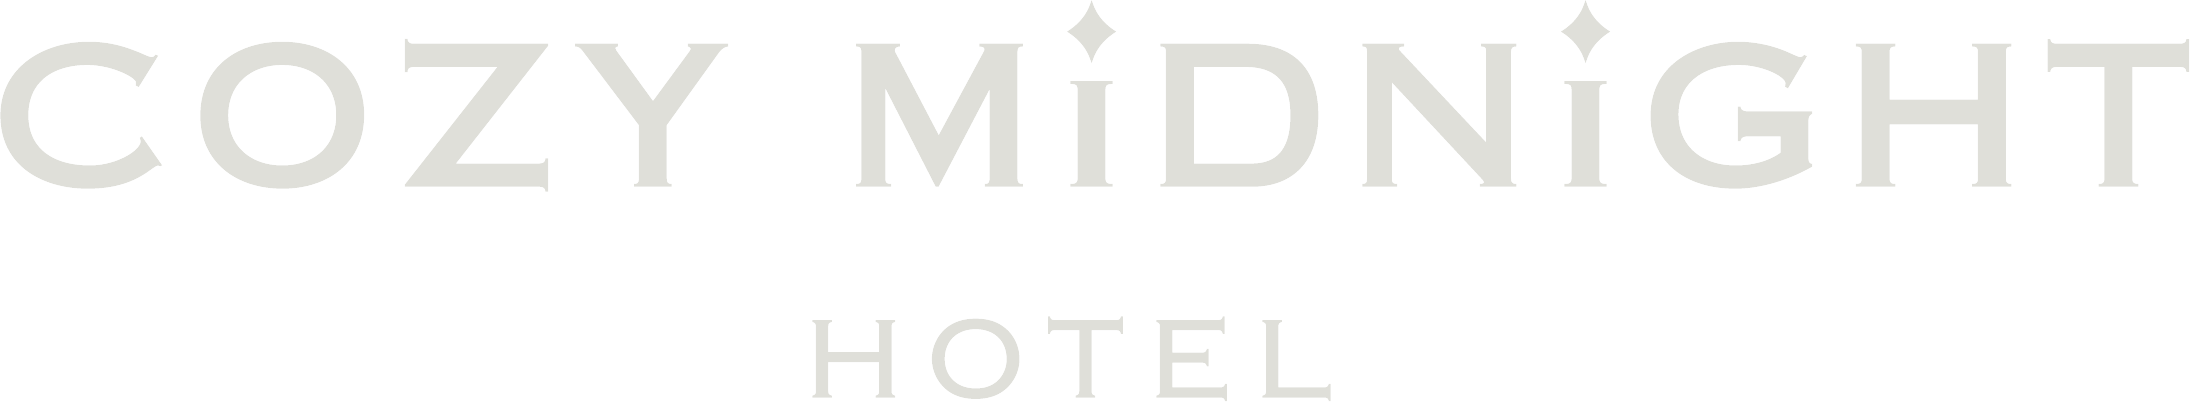 230701 Cozy Midnight Hotel Guideline Ol Logotype 反白 1